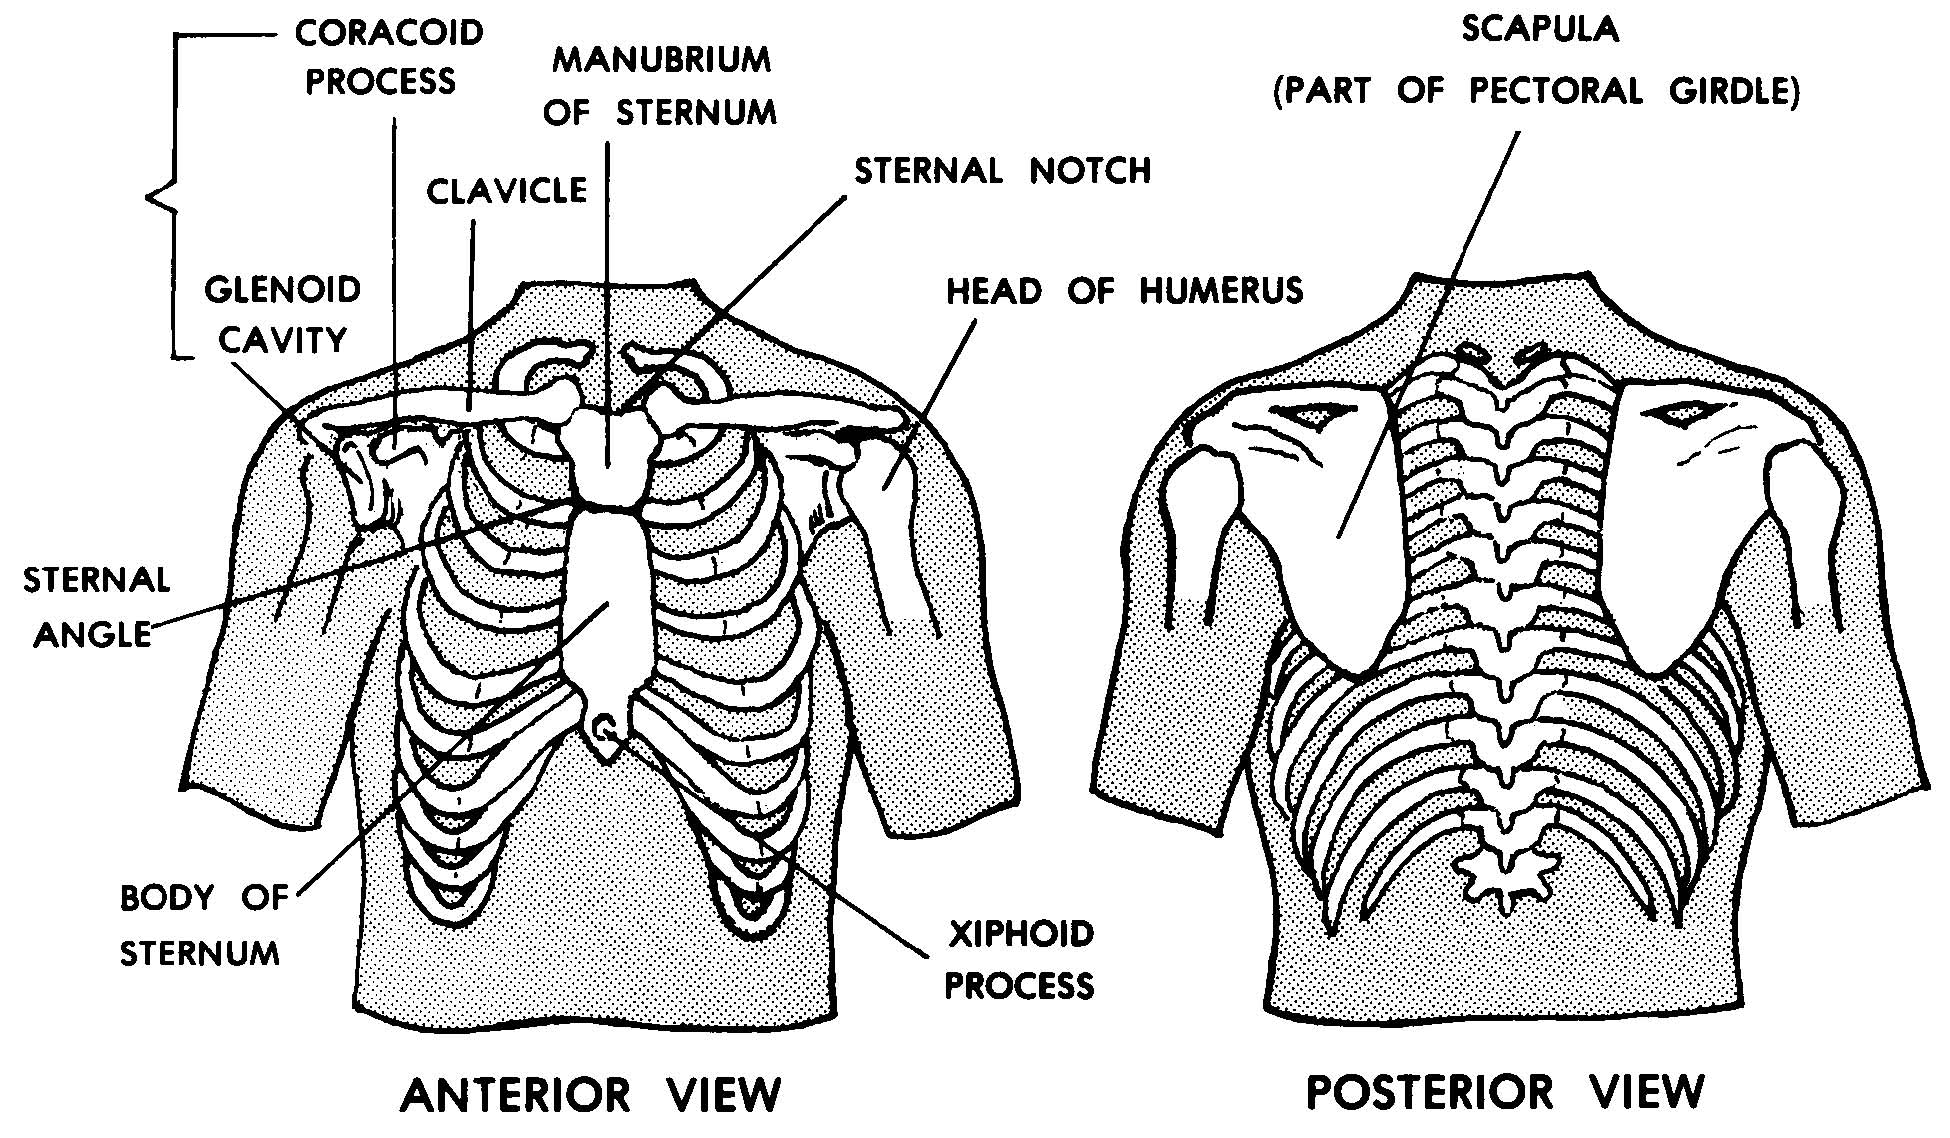 Images 04. Skeletal System | Basic Human Anatomy